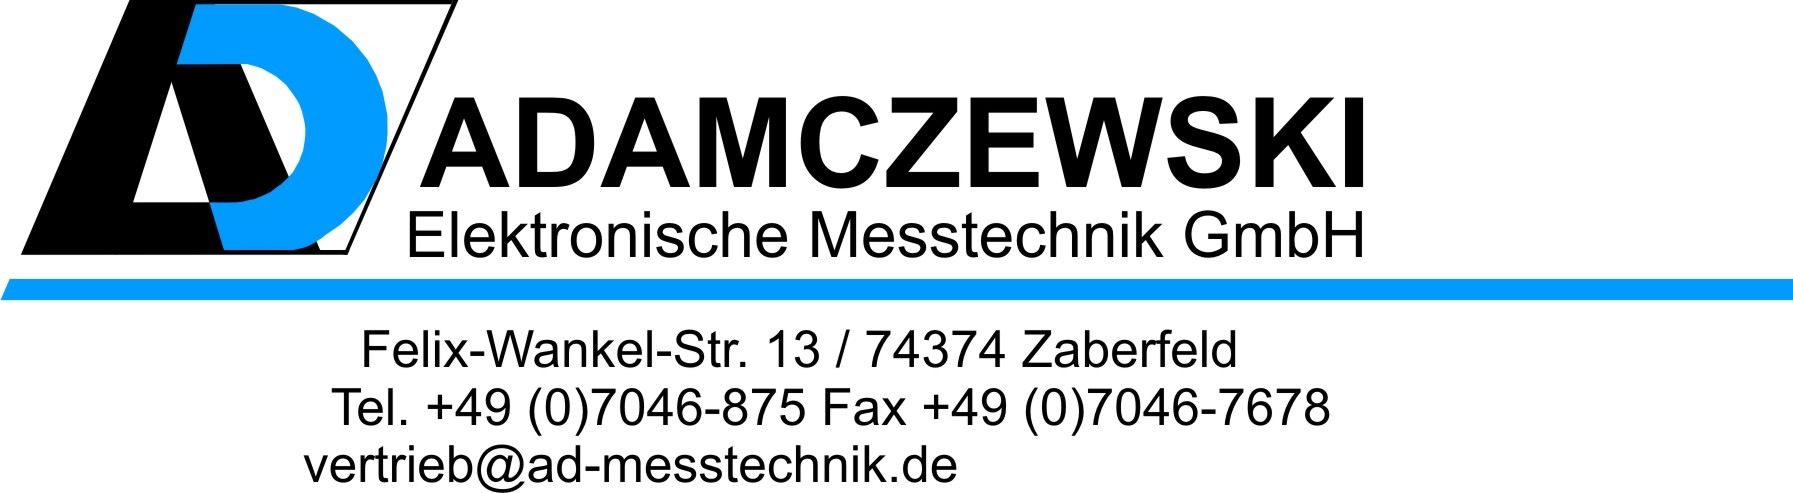 ADAMCZEWSKI Elektronische Messtechnik GmbH